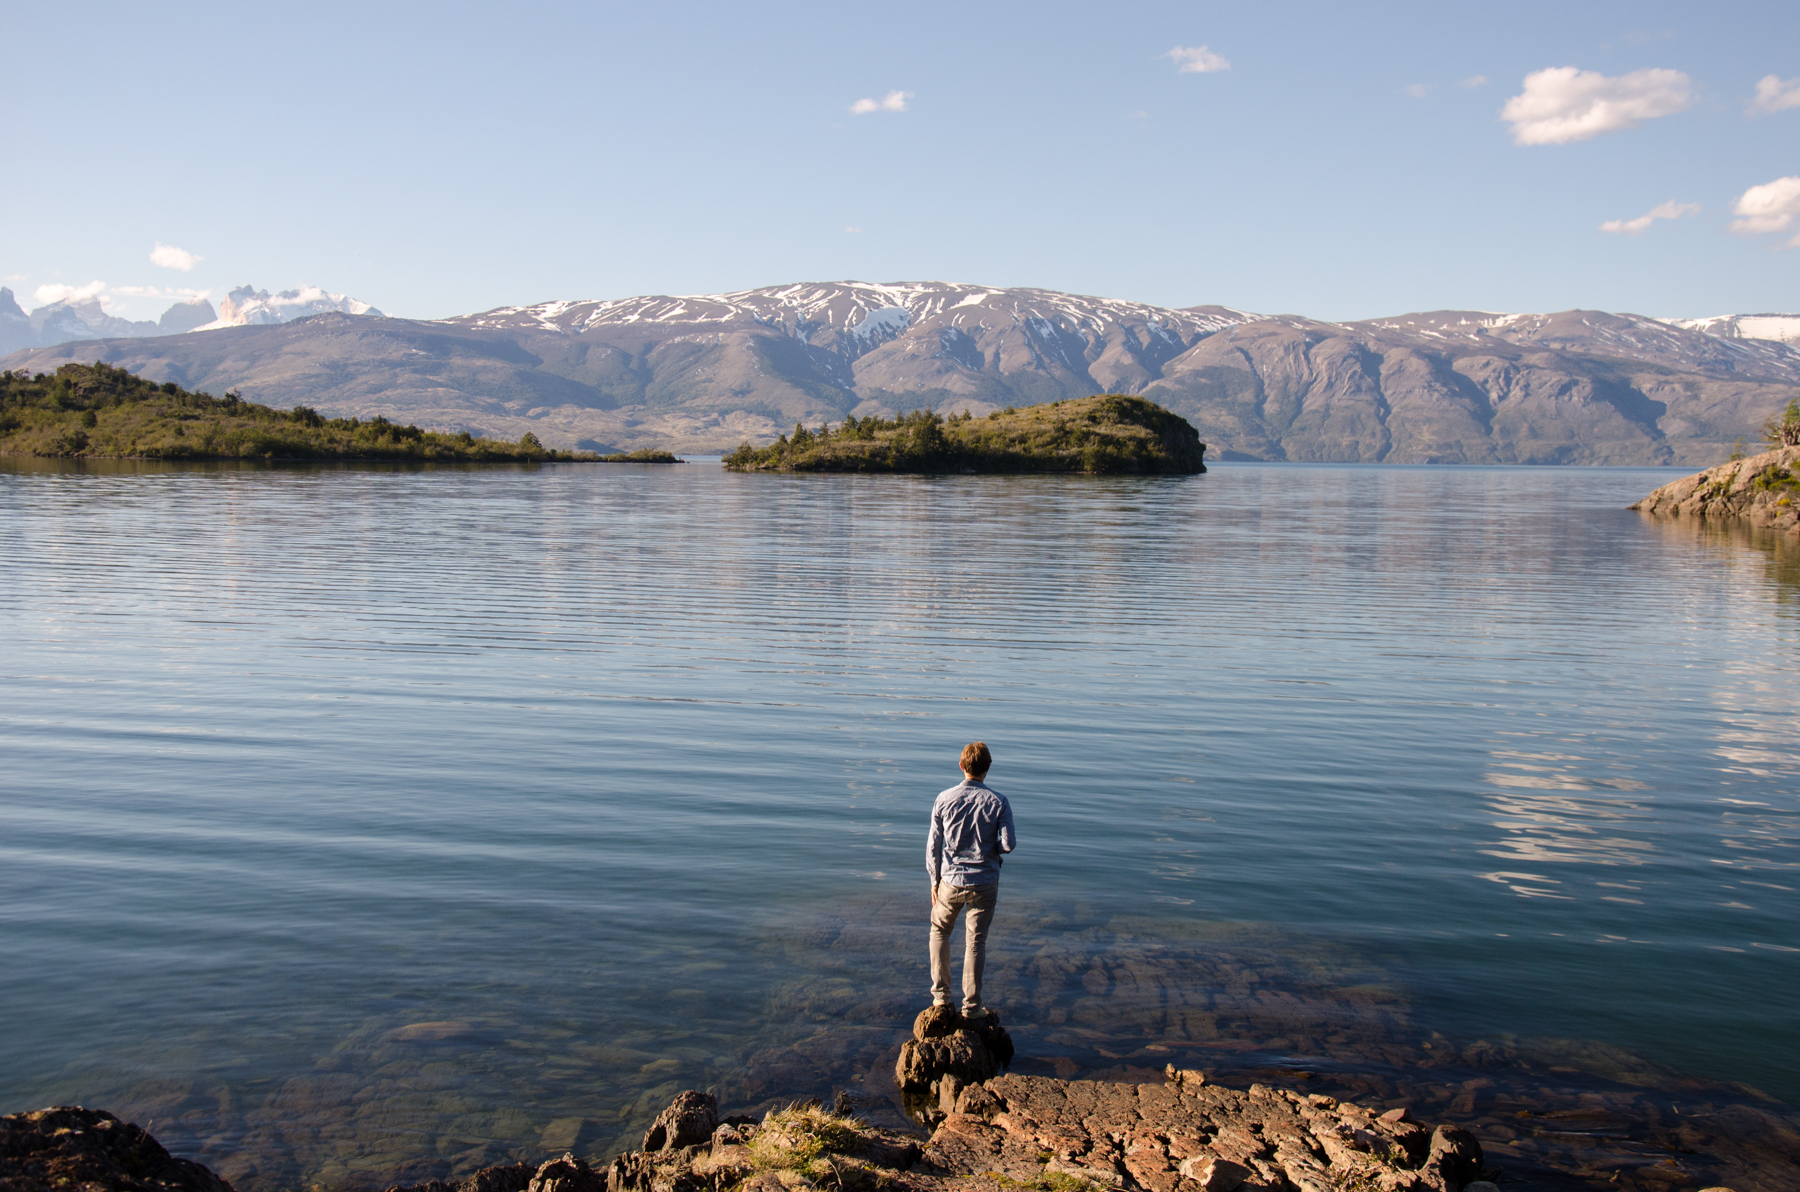 Patagonia Camp, on the shores of Lago Toro